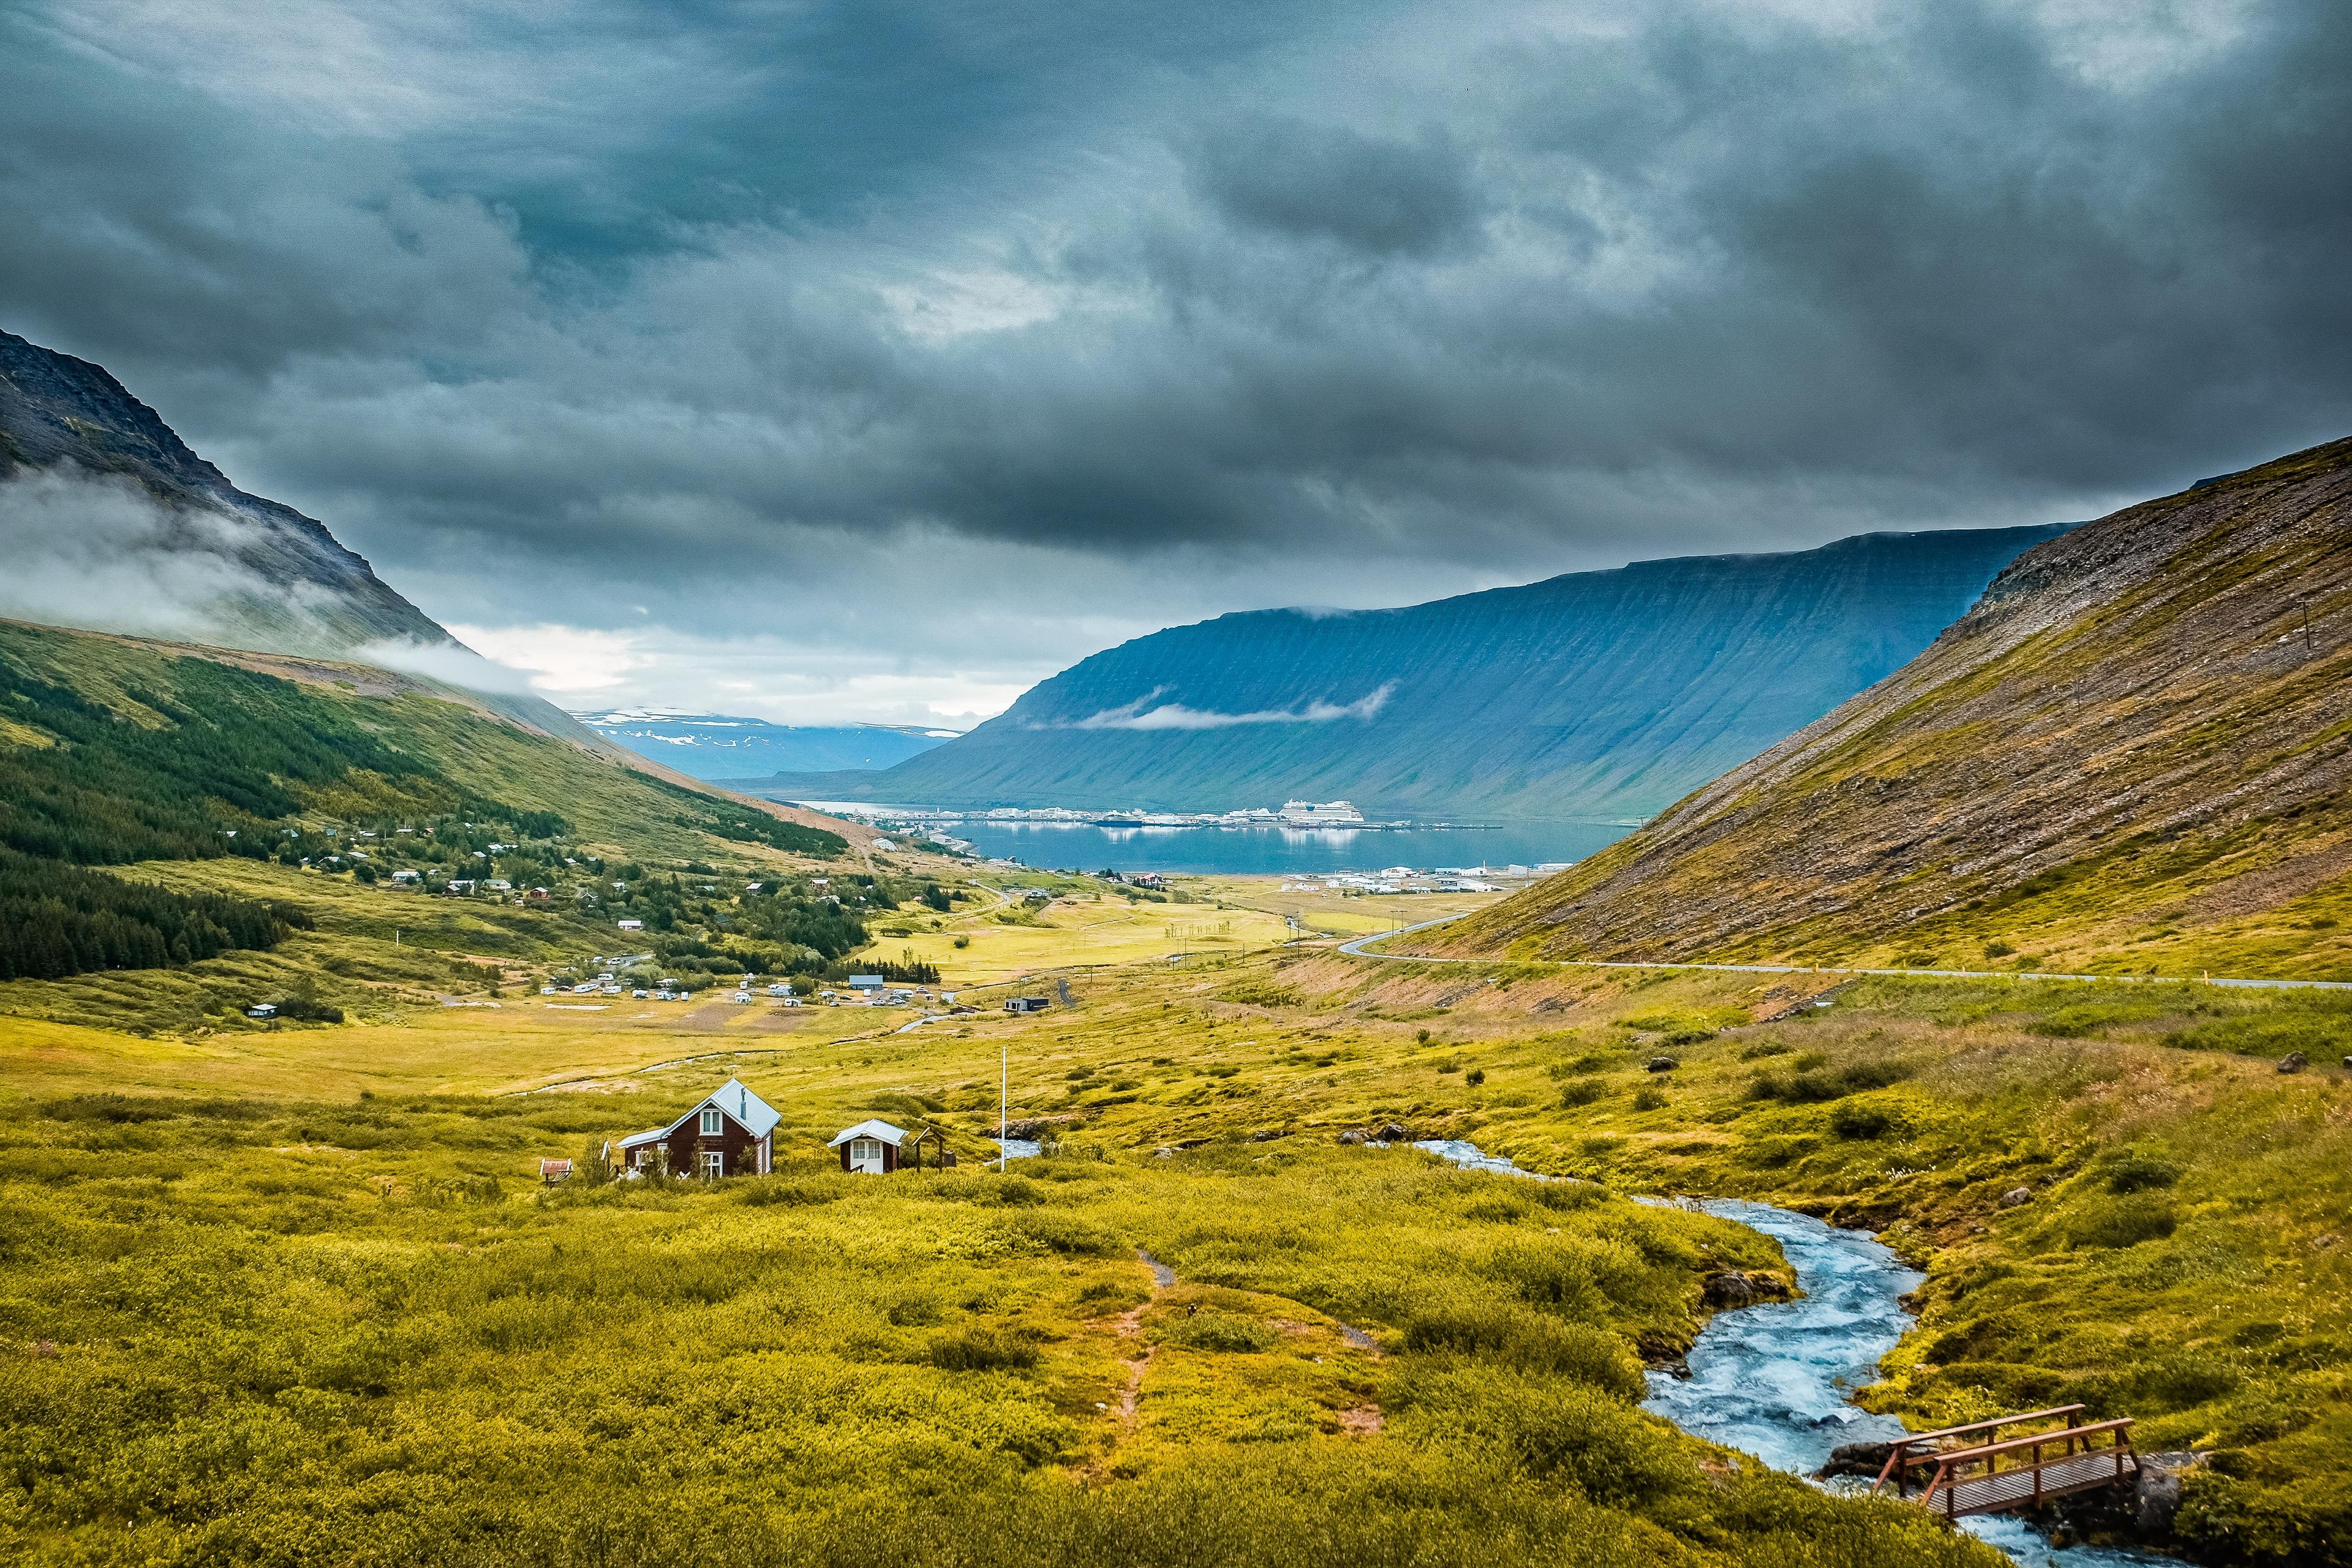 Remote fjord landscape with dark clouds